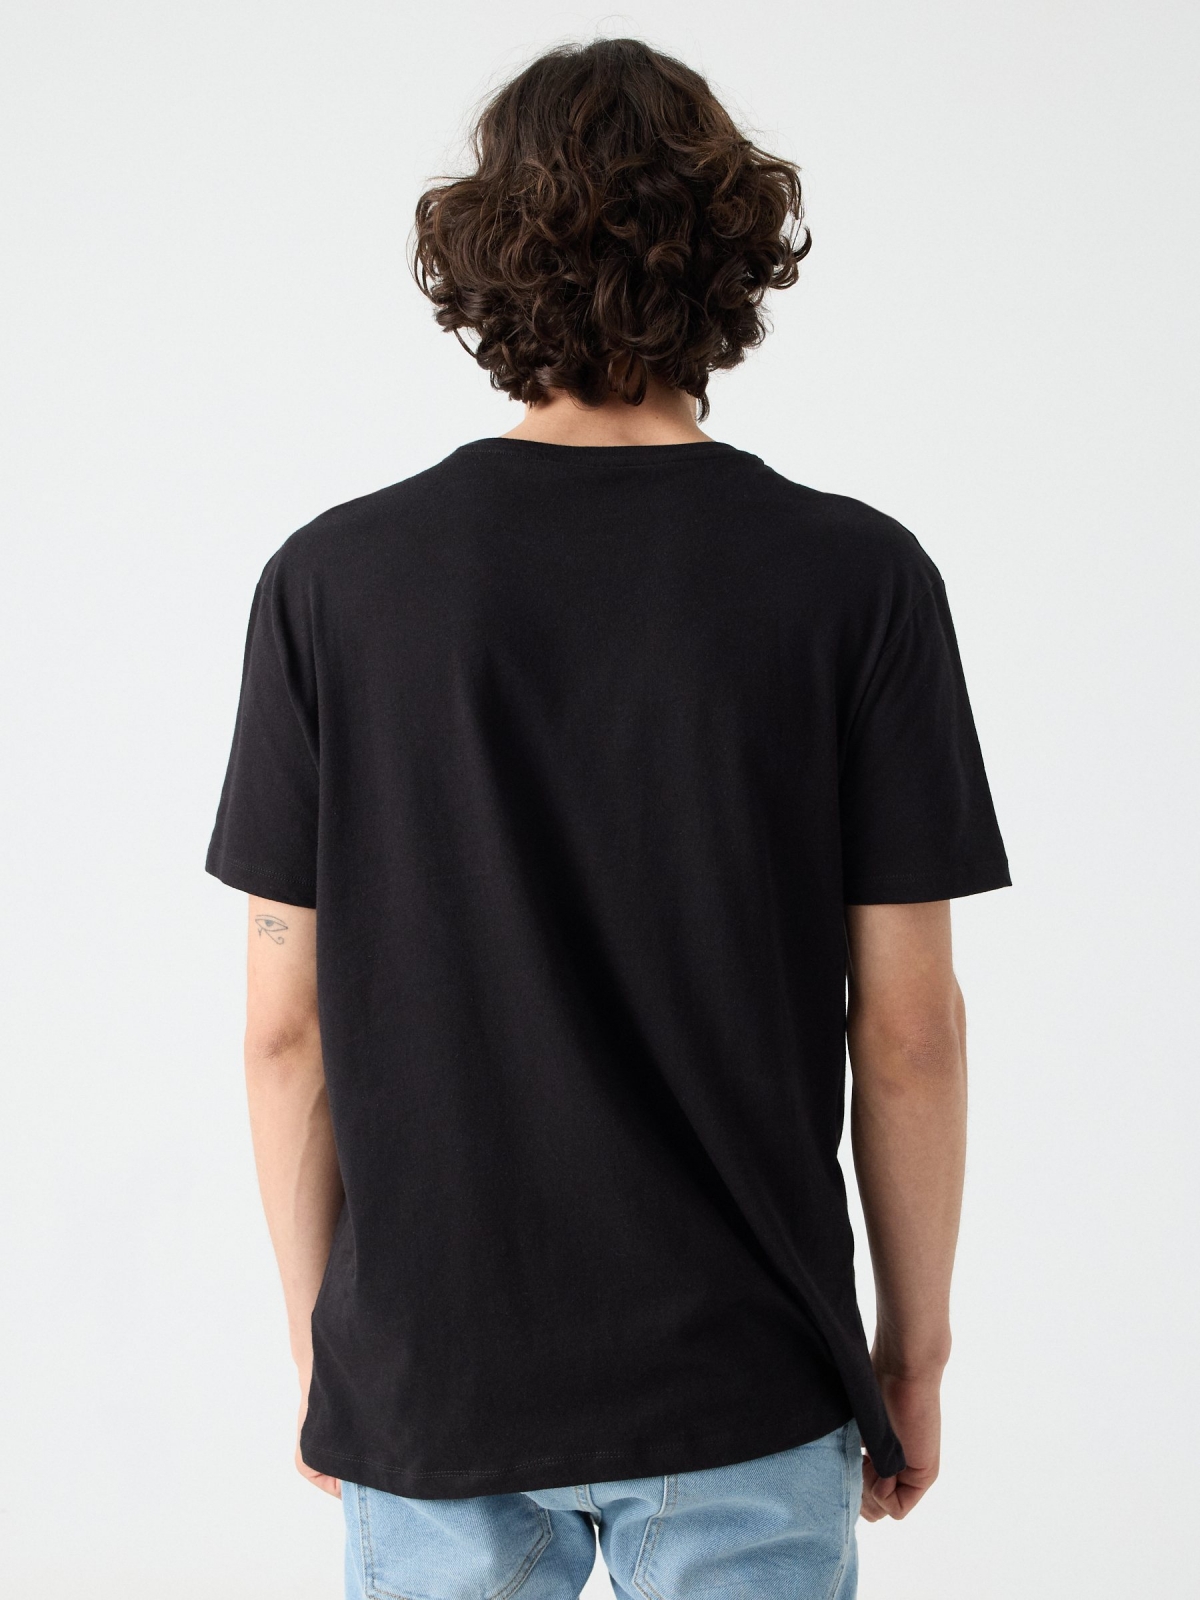 Camiseta estampado pantera negra negro vista media trasera